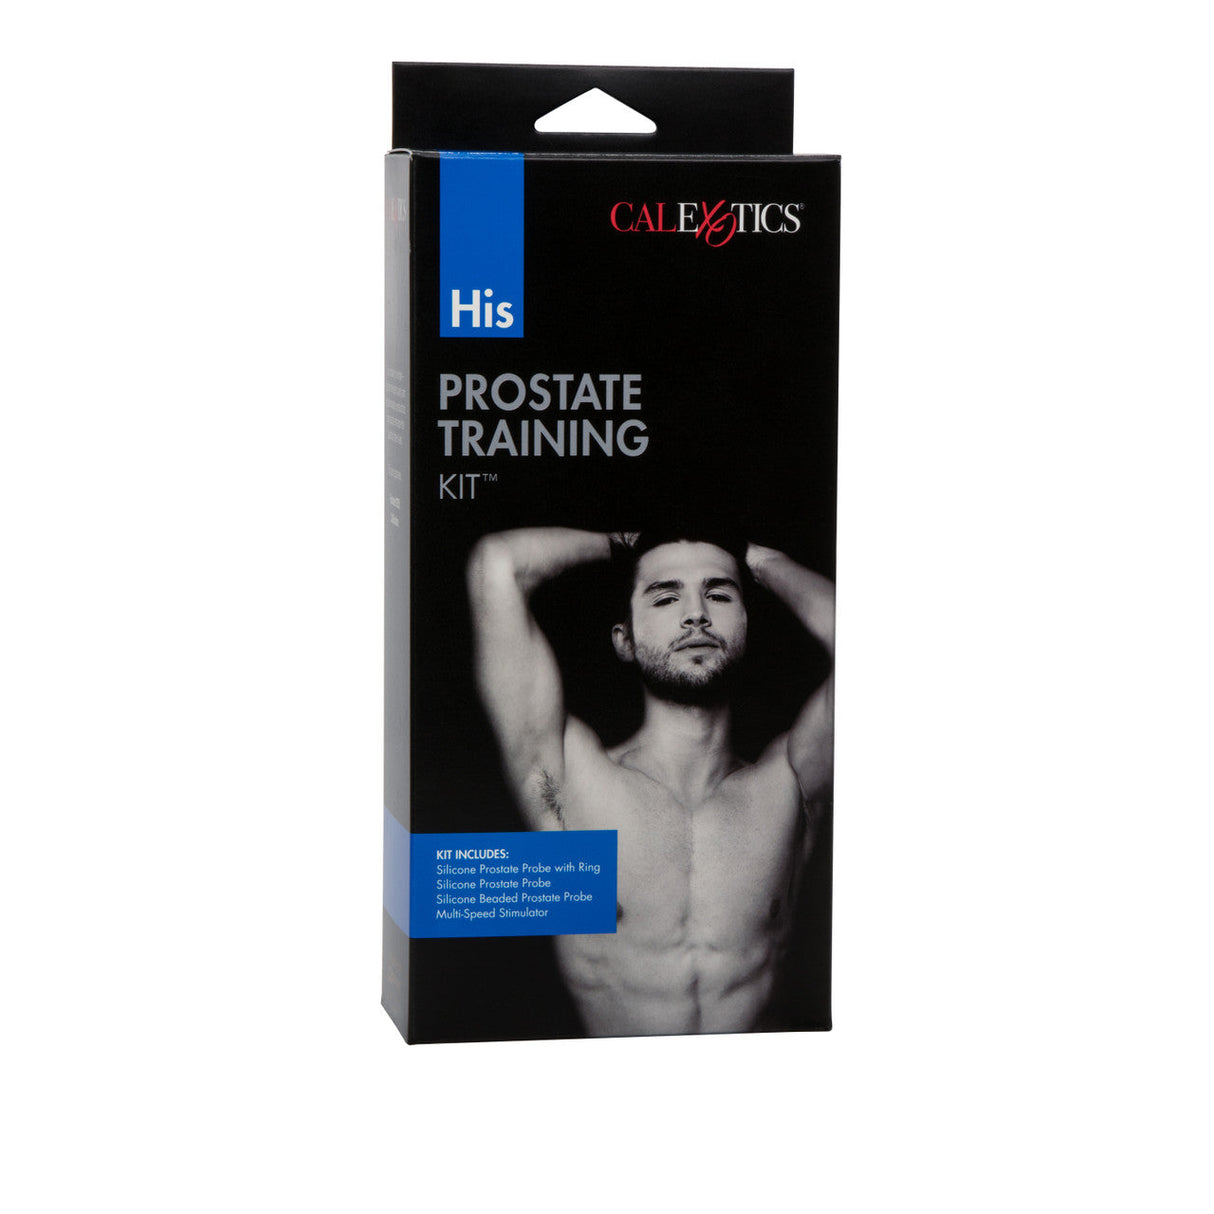 His Prostate Training Kit - Black